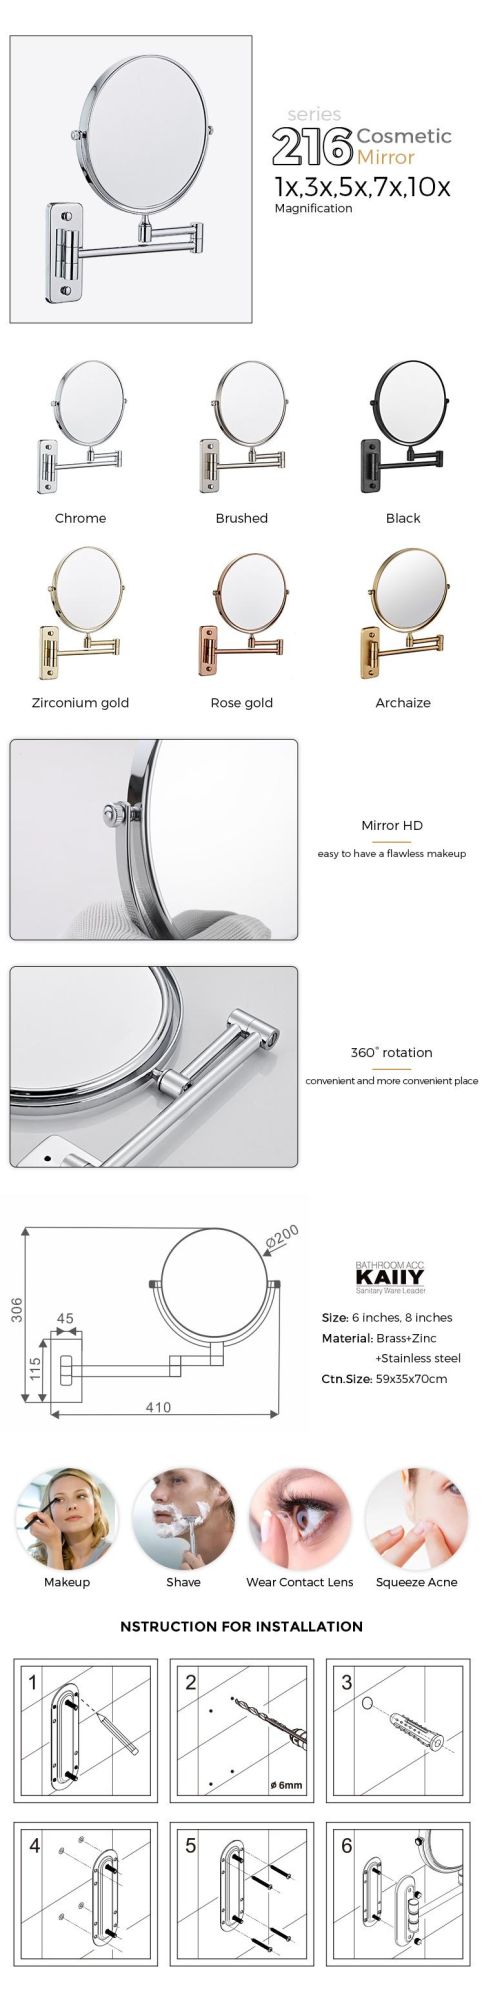 Kaiiy Modern Wall Mounted Cosmetic Mirror Bathroom Accessories Mirror